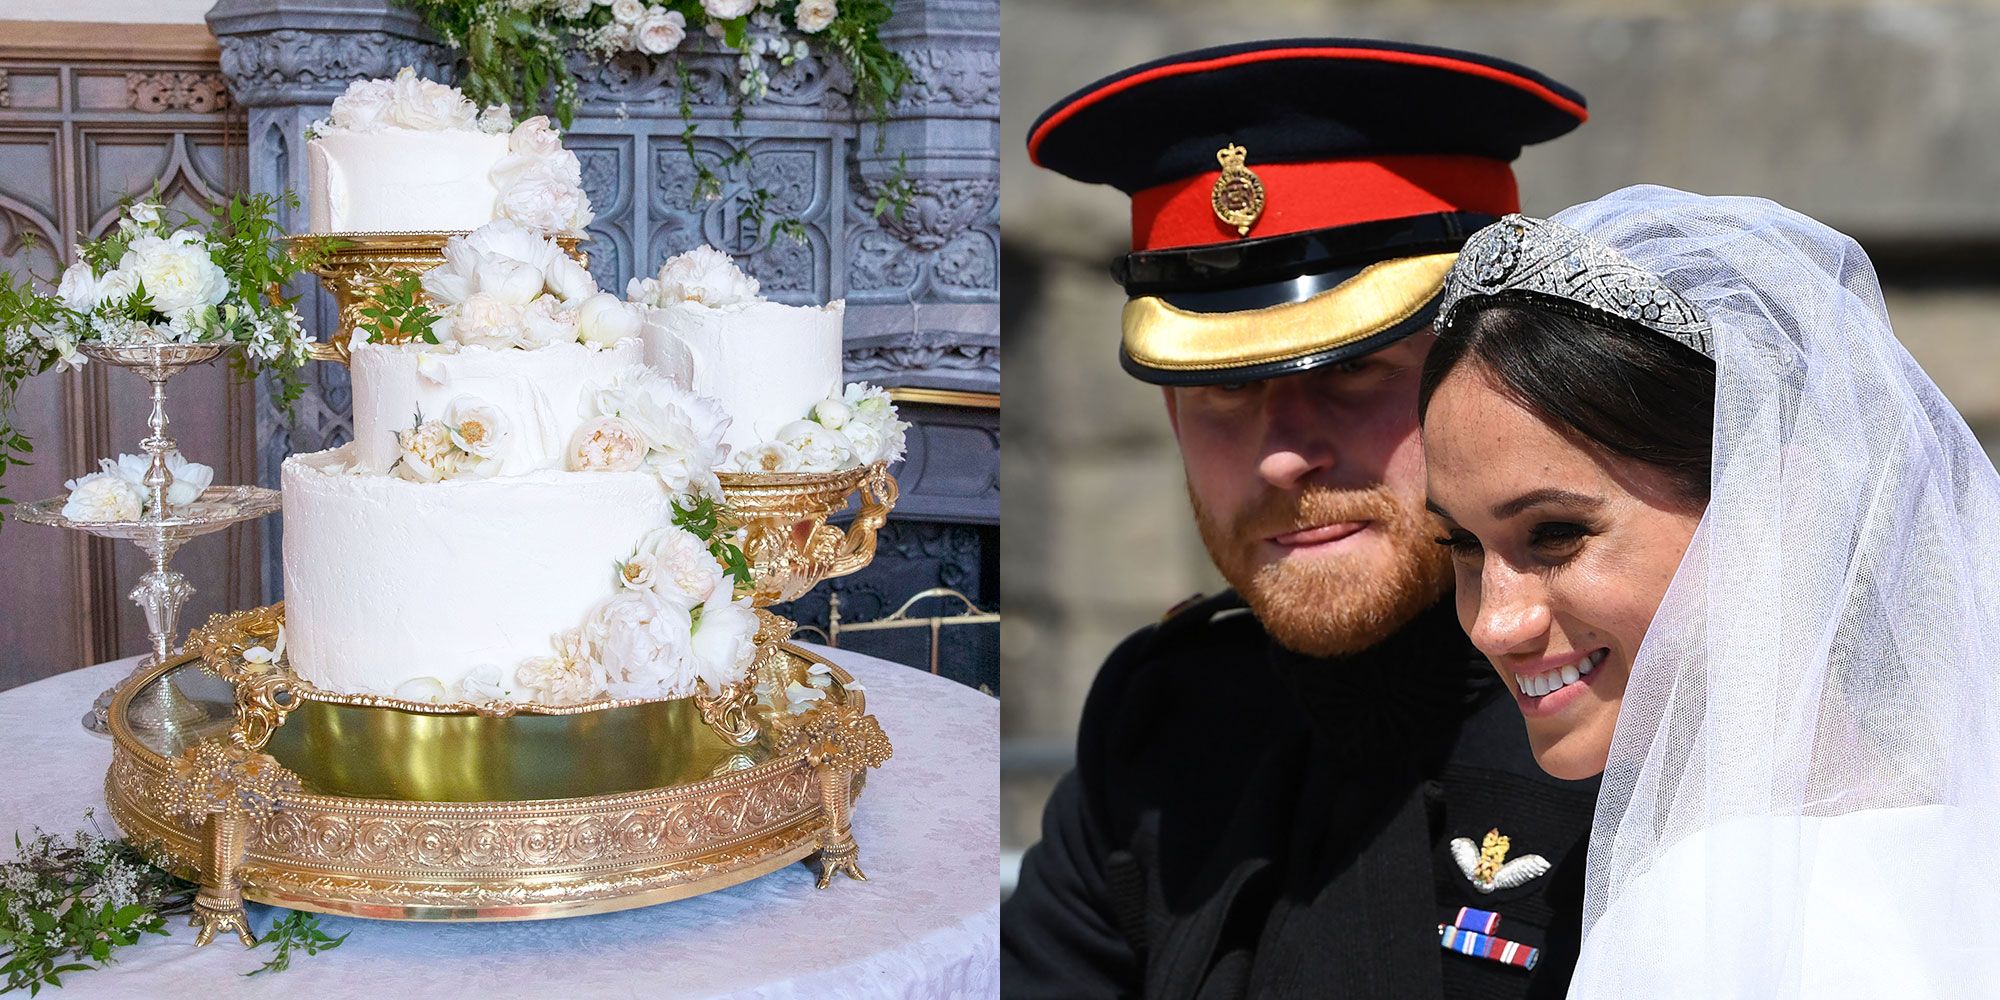 Crummb Cakes :: Singapore's most beautiful wedding cakes